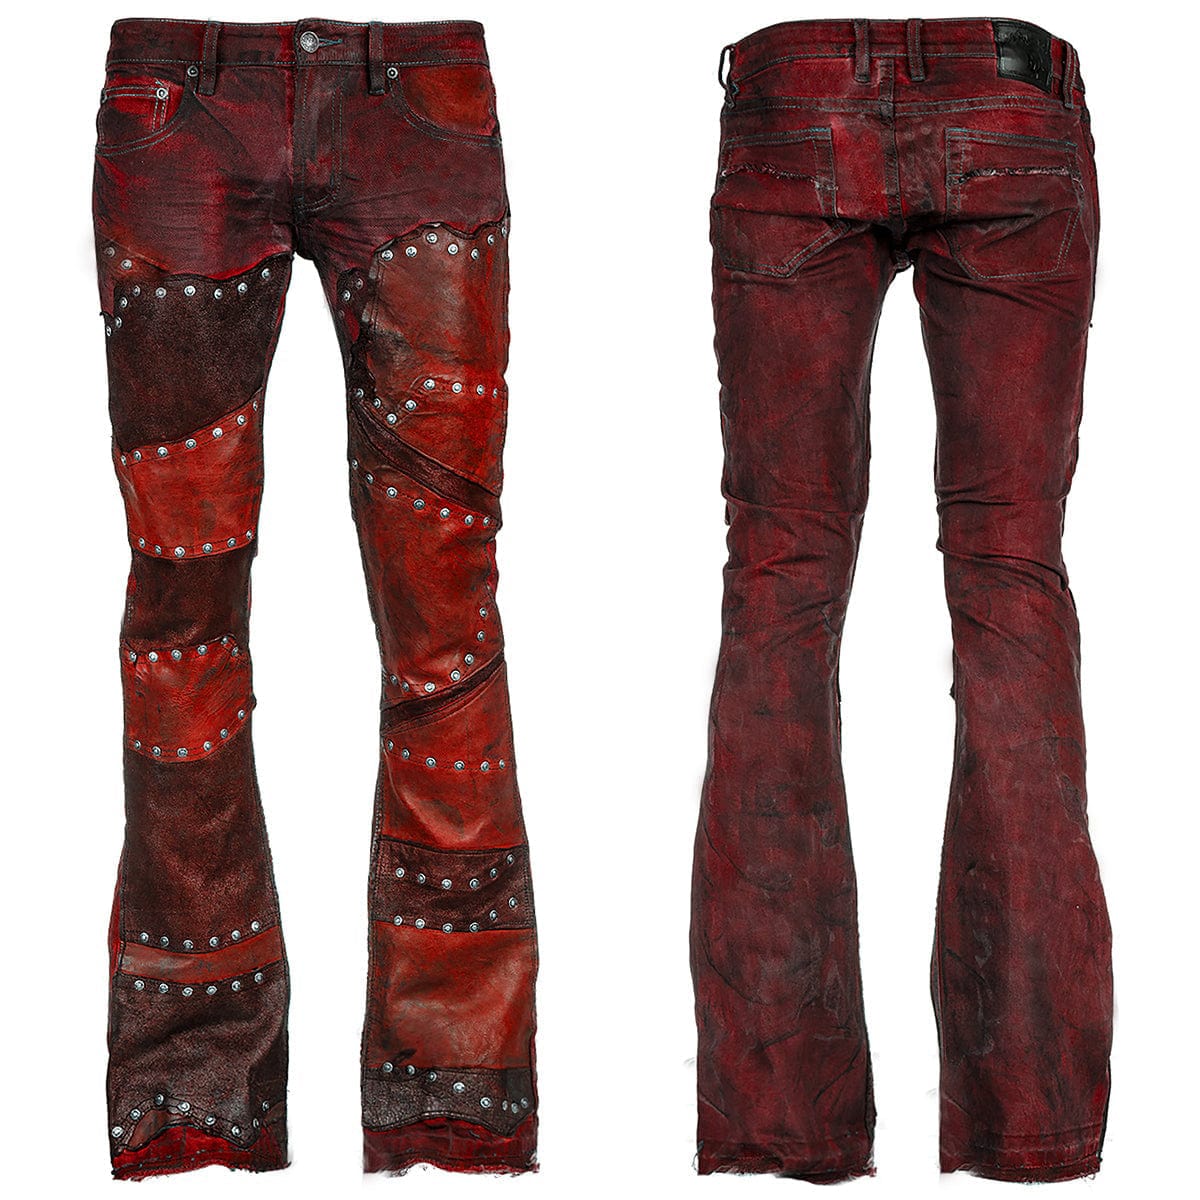 Custom Chop Shop Pants Wornstar Custom Jeans - Red Warrior - WSCP-SJ006